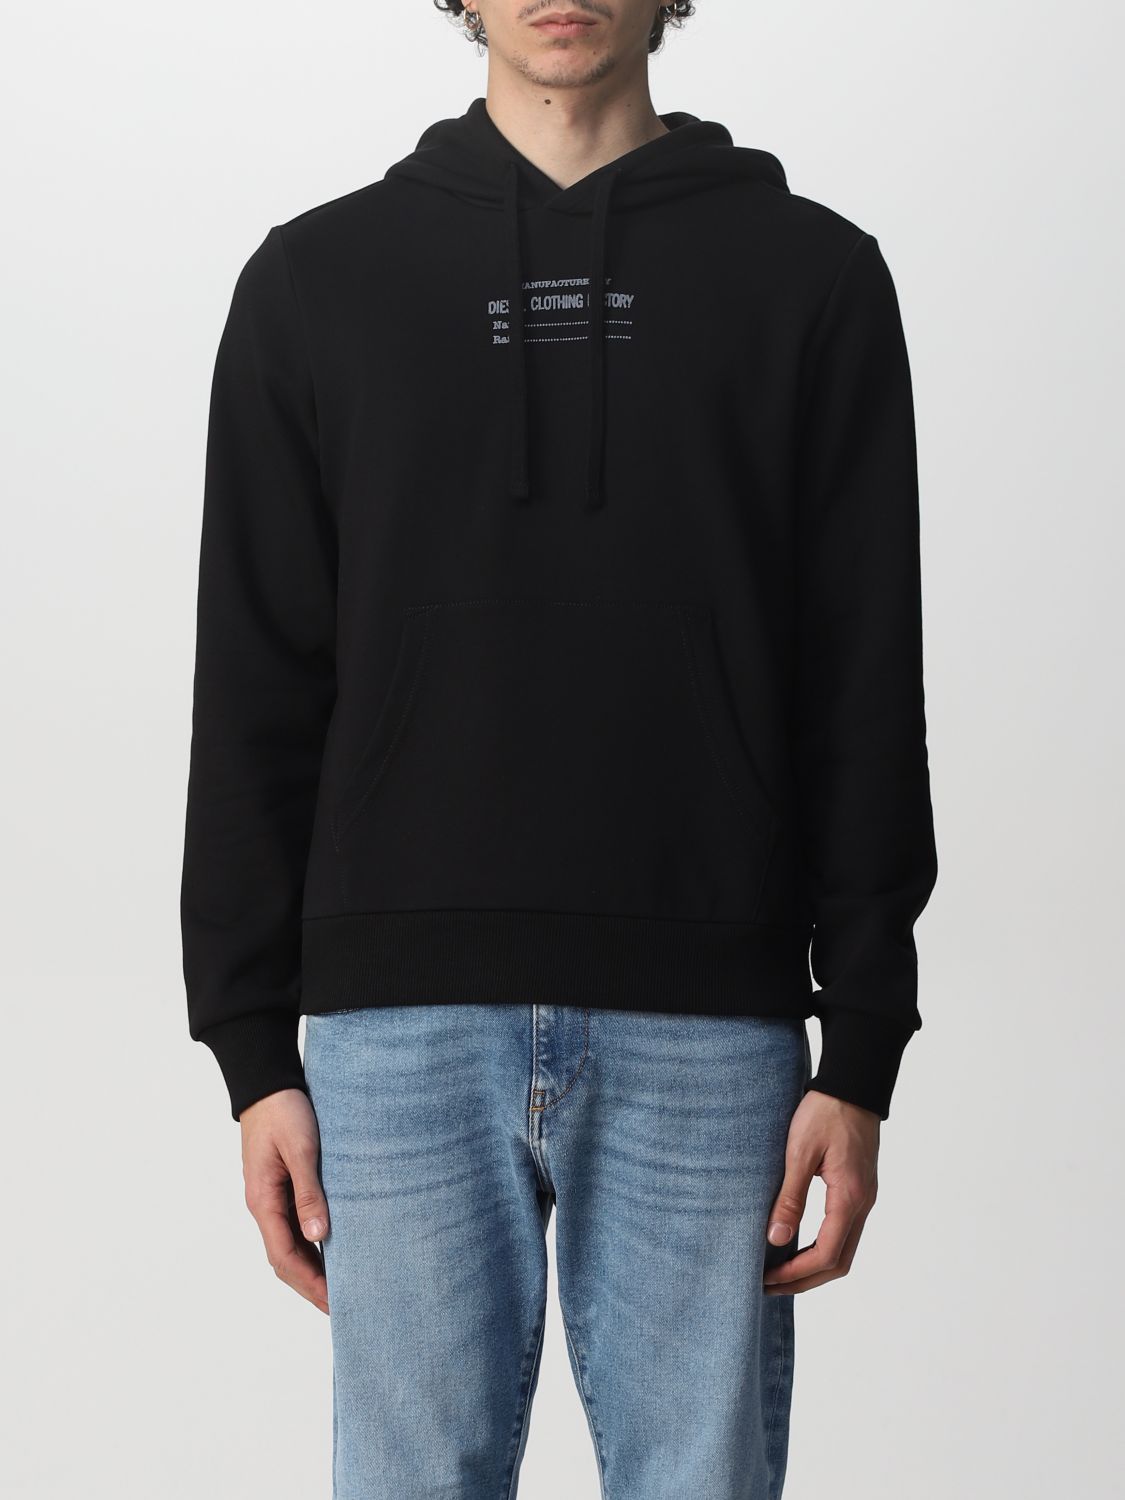 DIESEL: Basic cotton jumper - Black | Diesel sweatshirt A038140GRAC ...